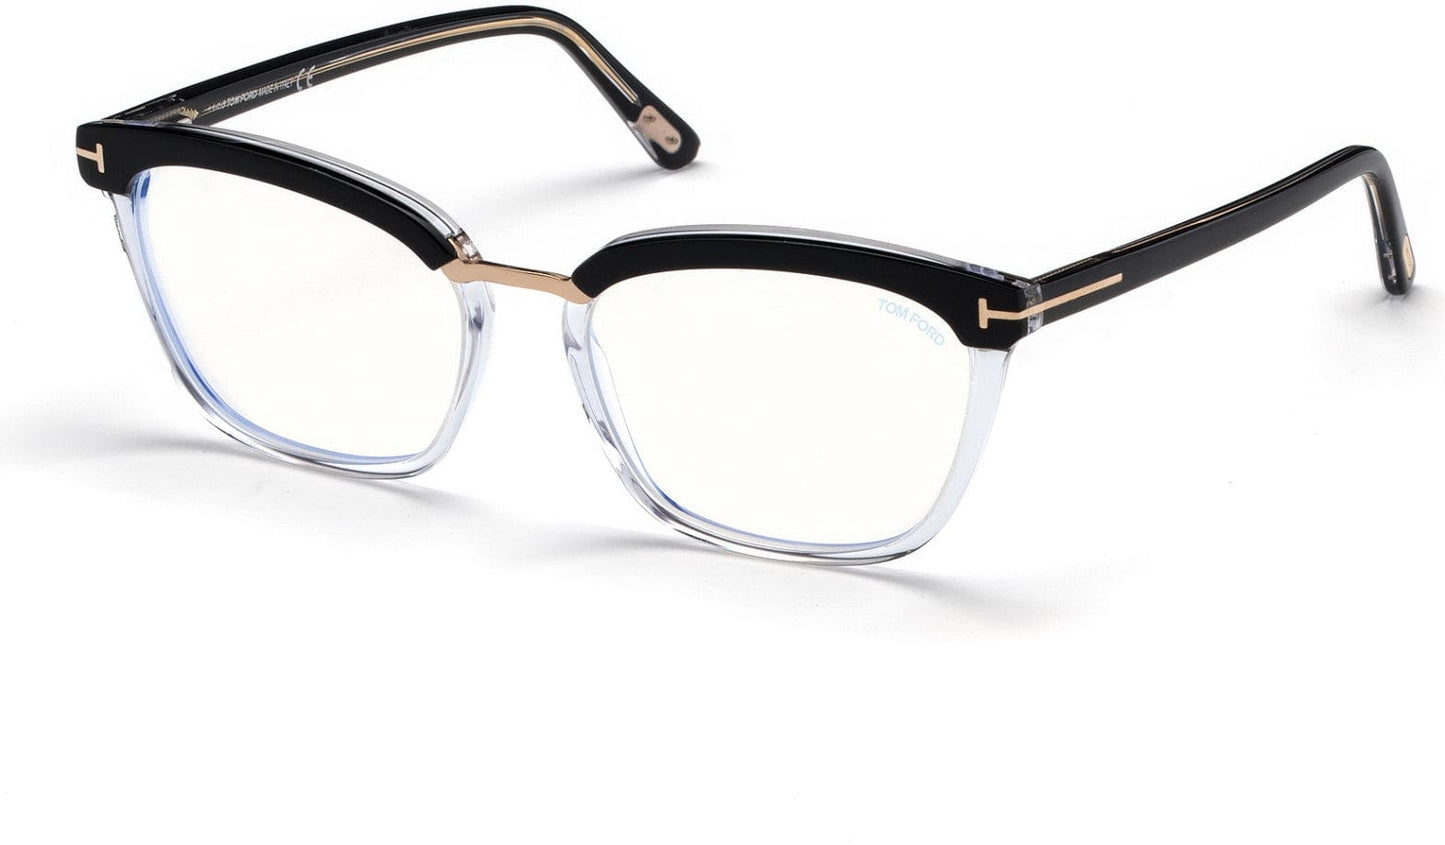 Tom Ford FT5550-B Geometric Eyeglasses 005-005 - Shiny Black & Crystal, Rose Gold Details/ Blue Block Lenses